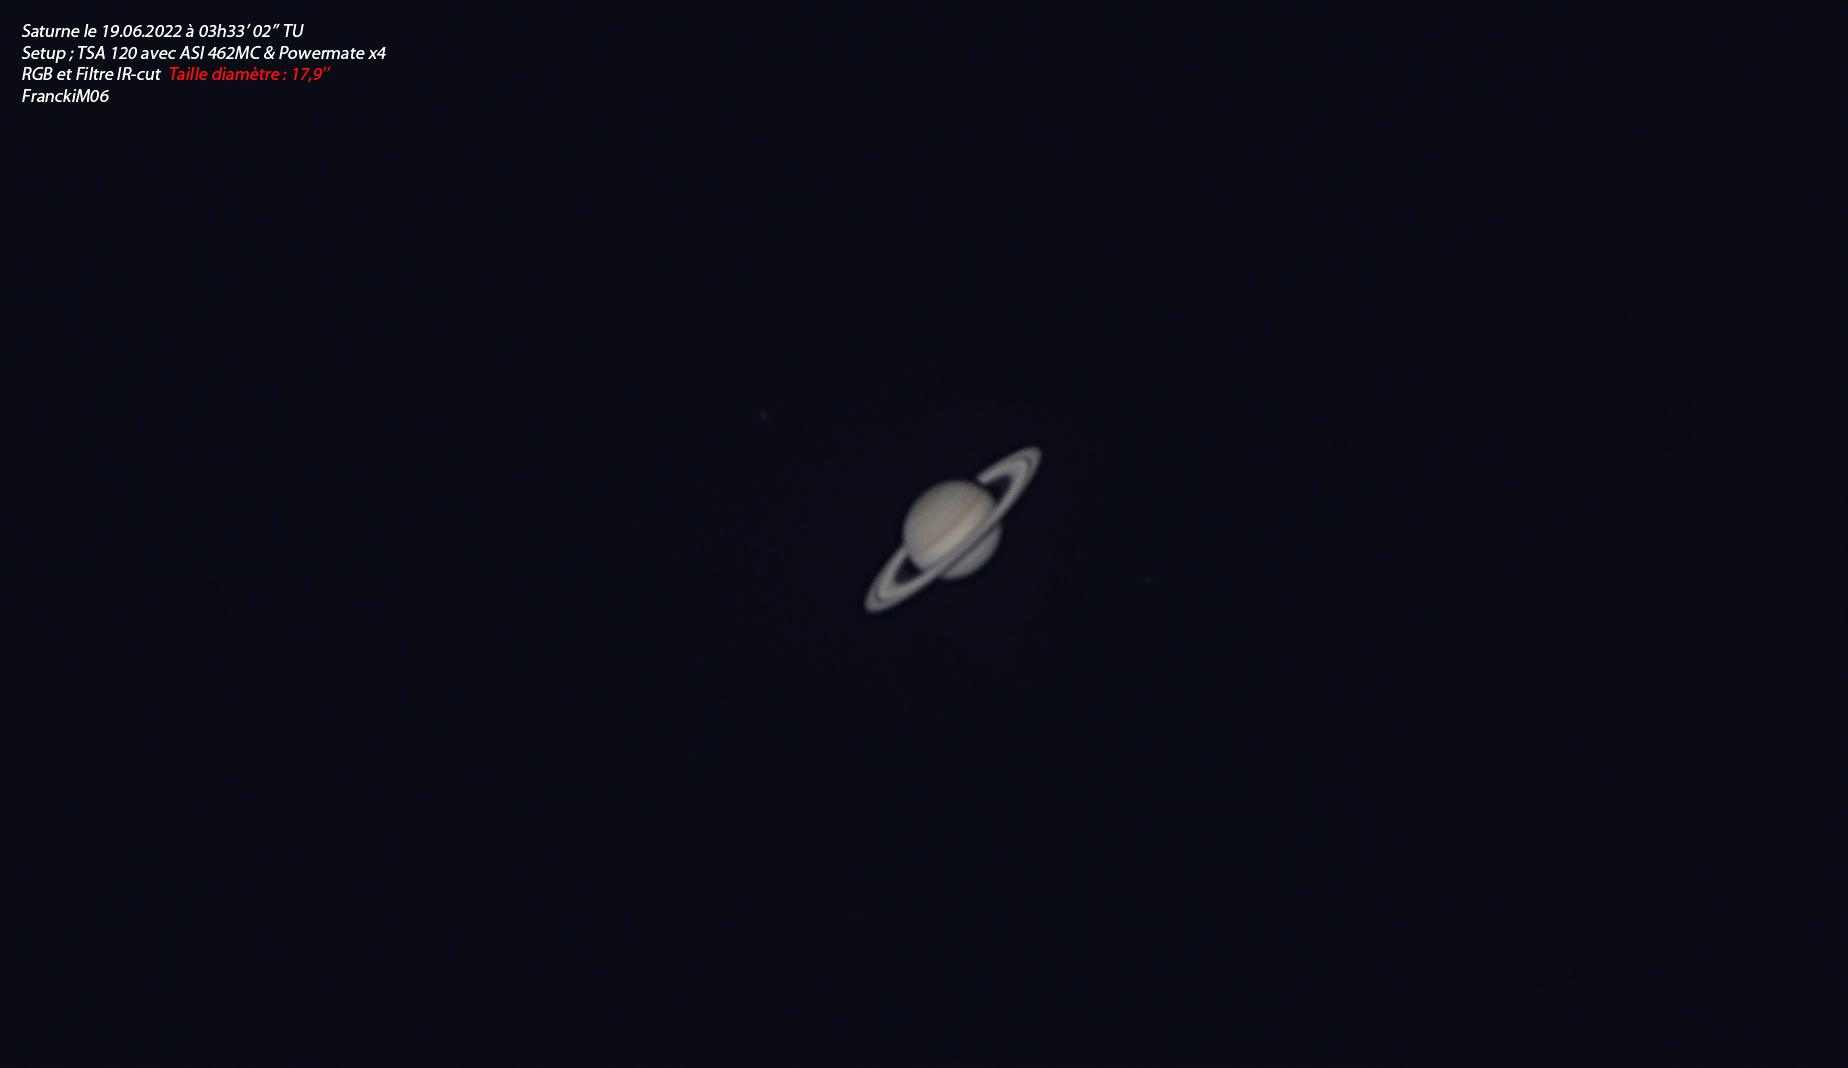 Saturne_053302_lapl6_ap69-1-FINAL-i.jpg